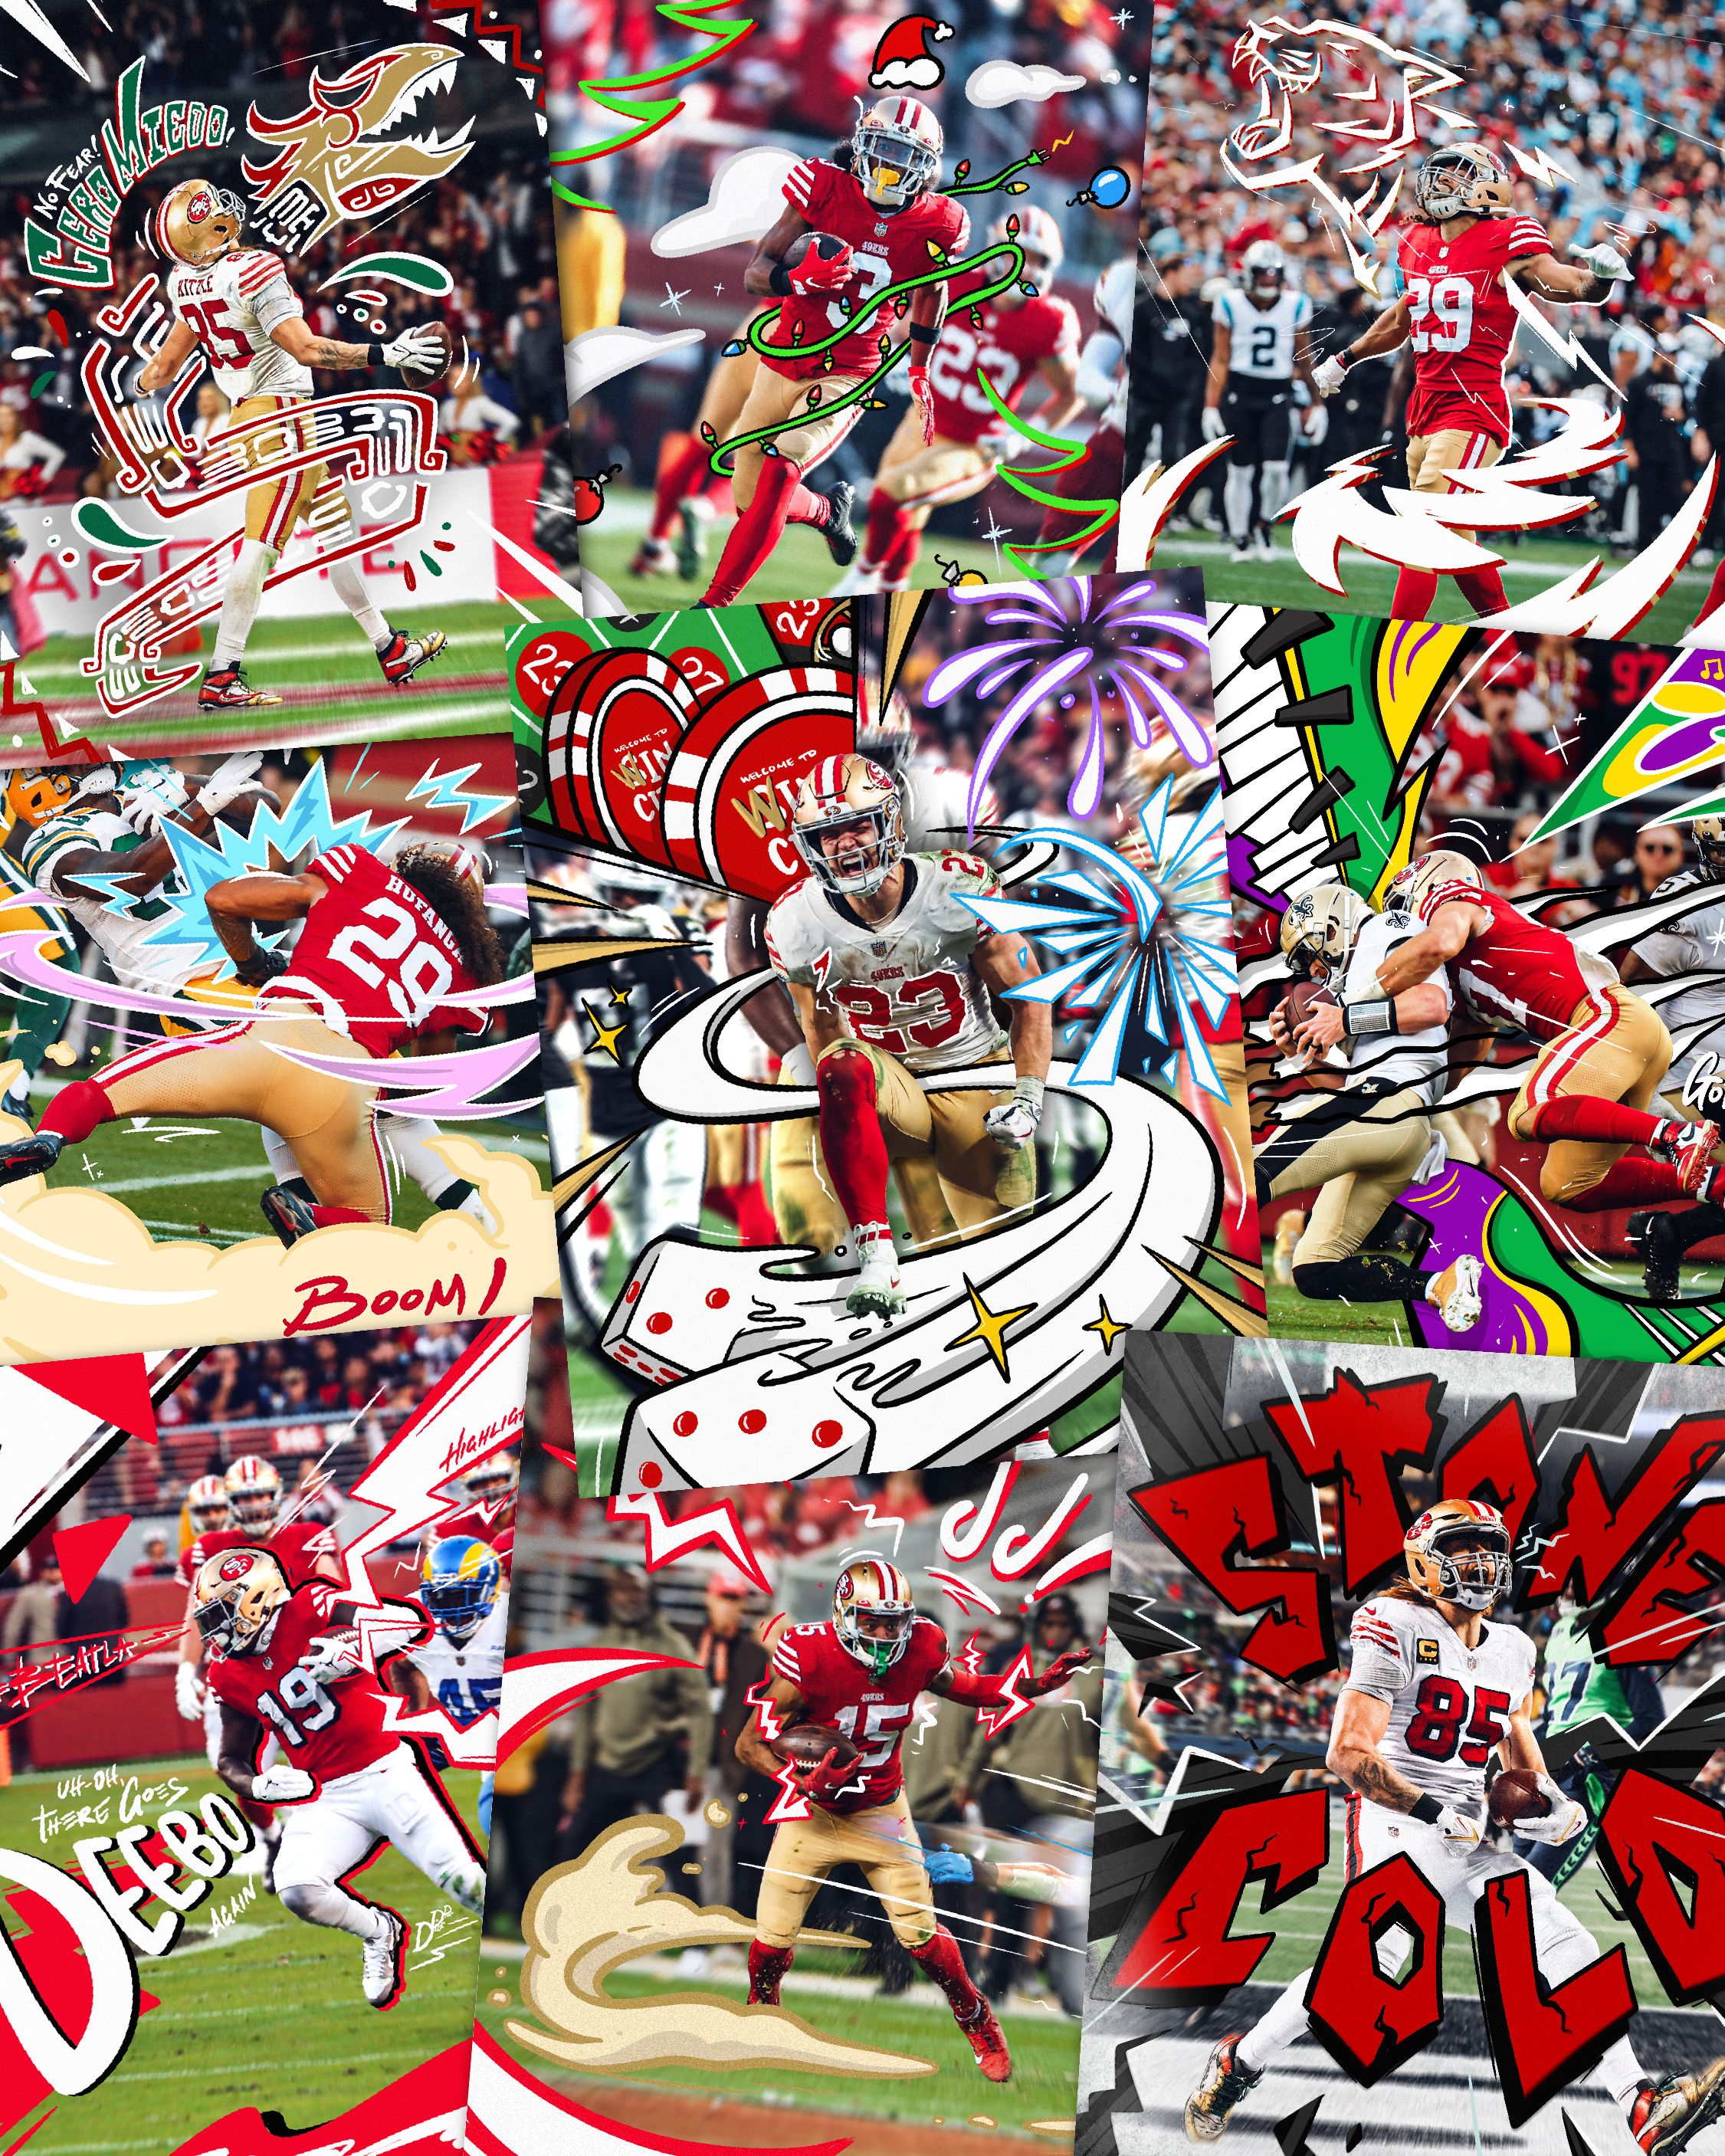 NFL San Francisco 49ers Digital Art by Sports Basics - Pixels